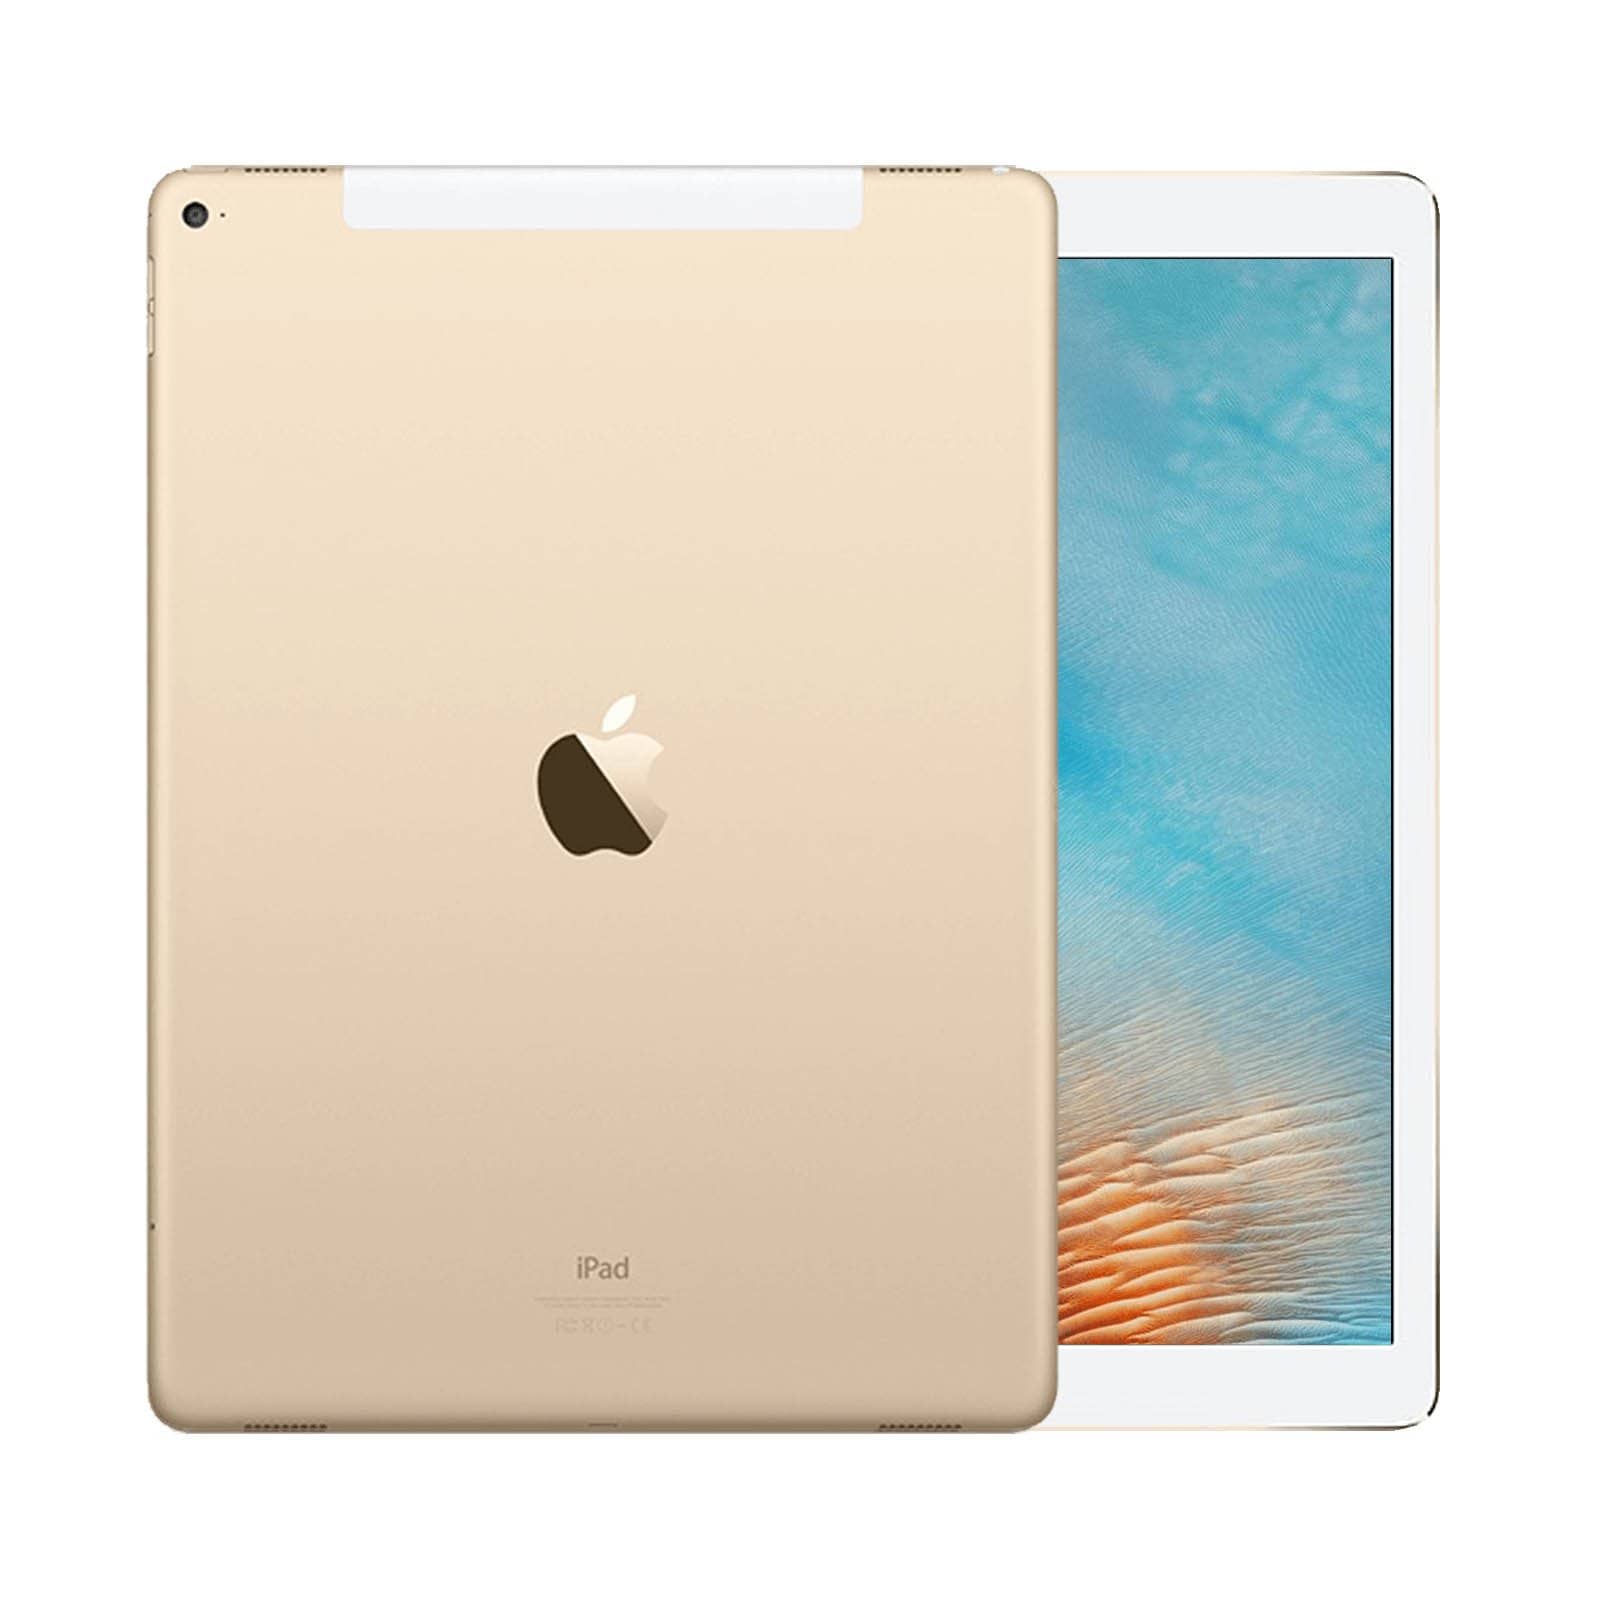 iPad Pro 12.9 Inch 2nd Gen 64GB Gold Good - WiFi 64GB Gold Good